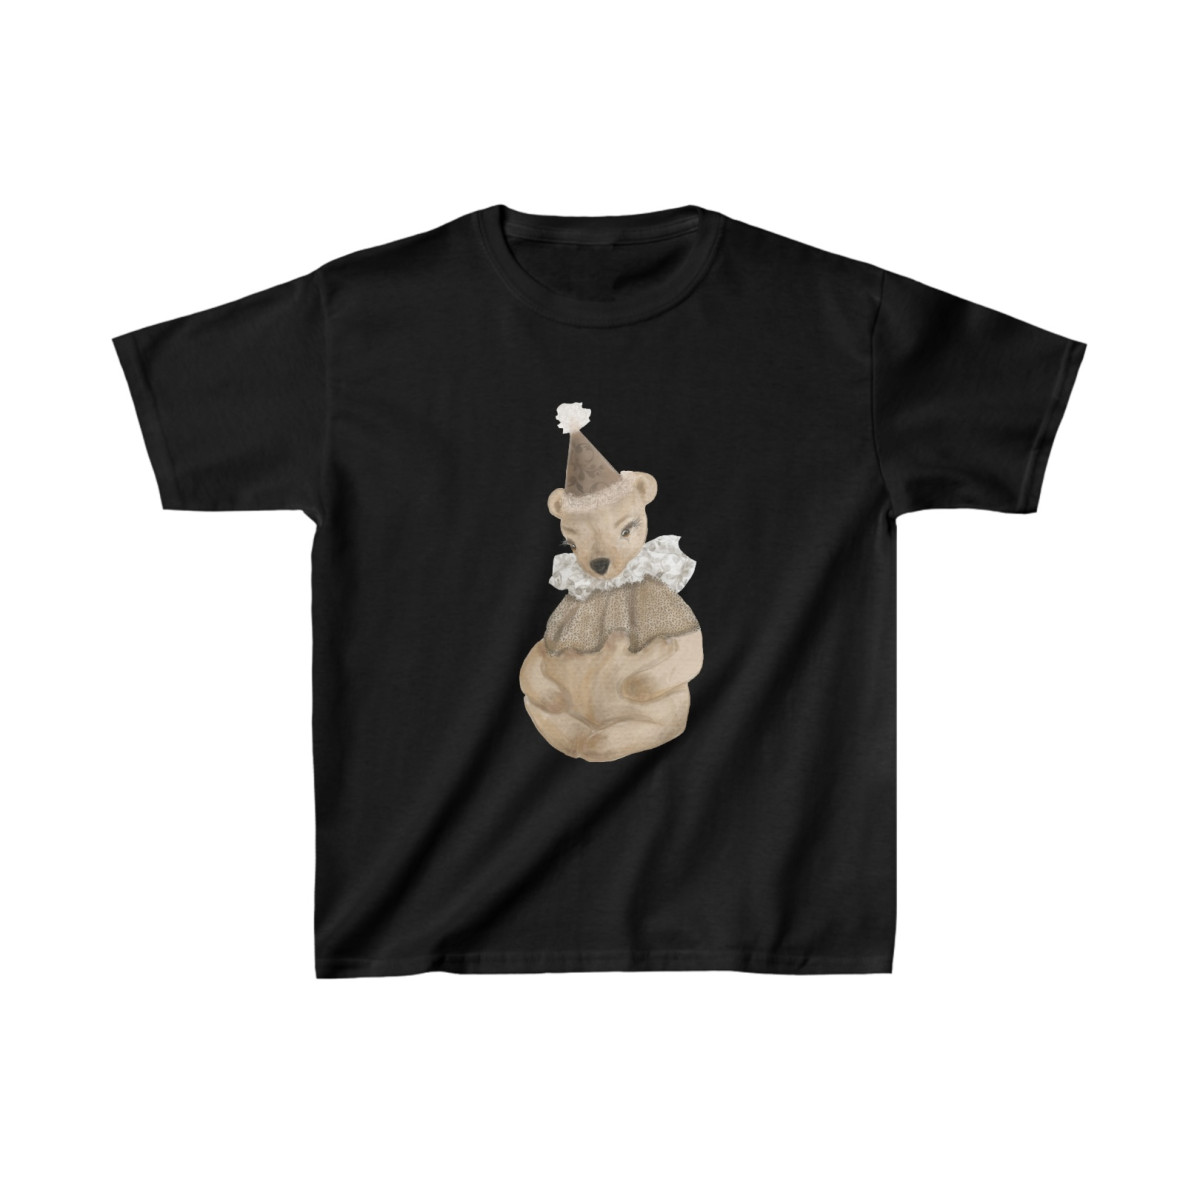 Koszulka MIŚ VINTAGE dla dziecka czarna T shirt